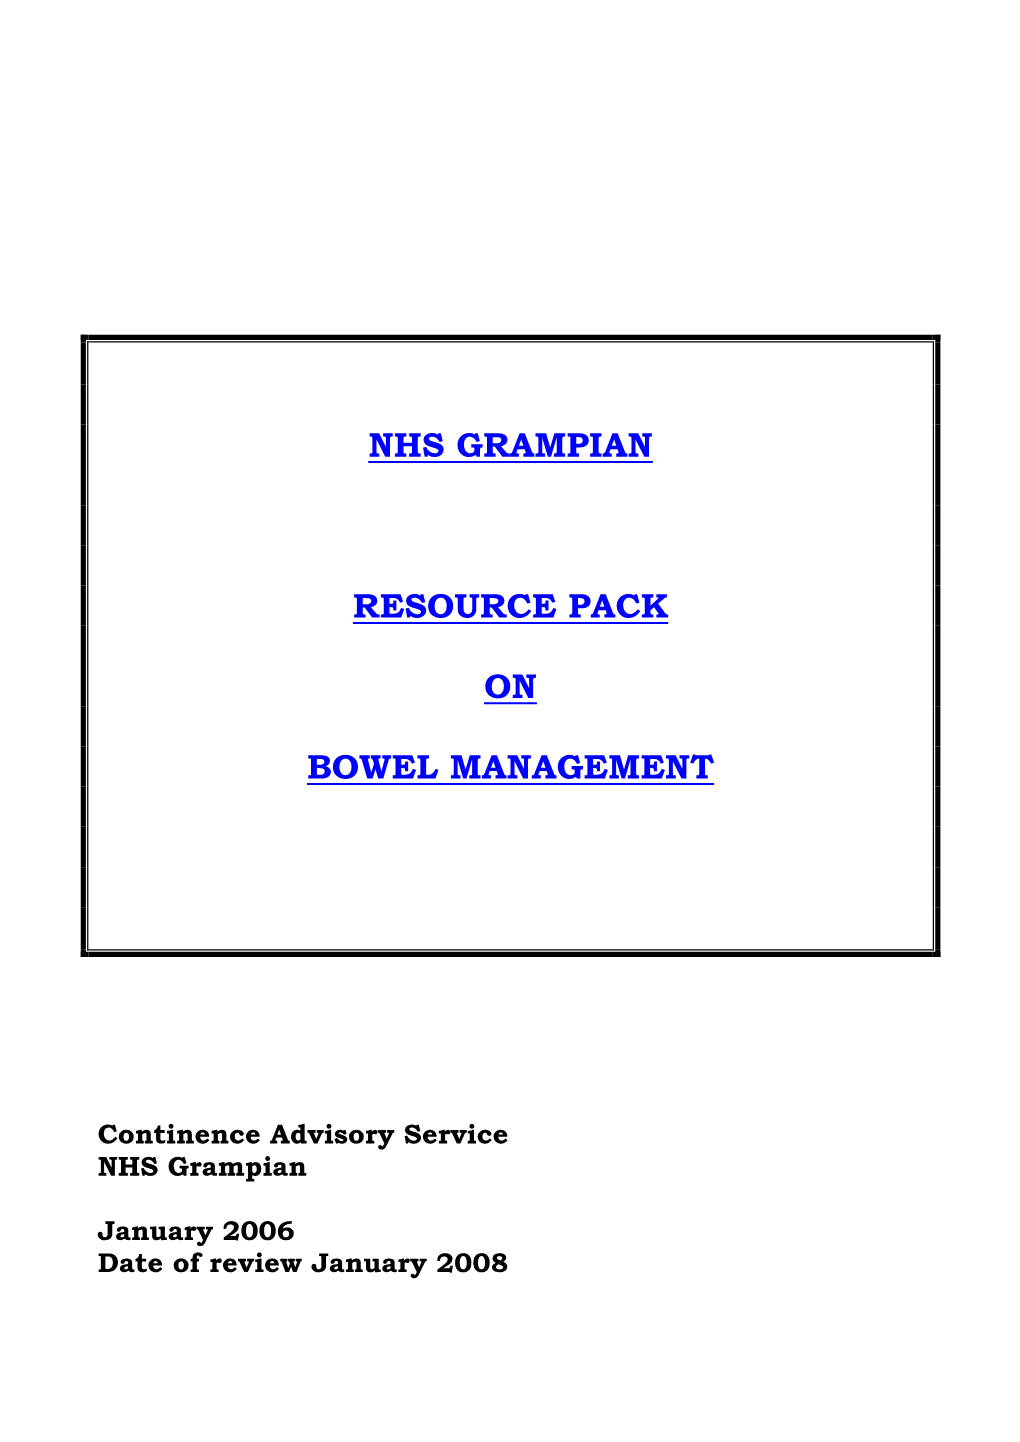 Nhs Grampian Resource Pack on Bowel Management Contents